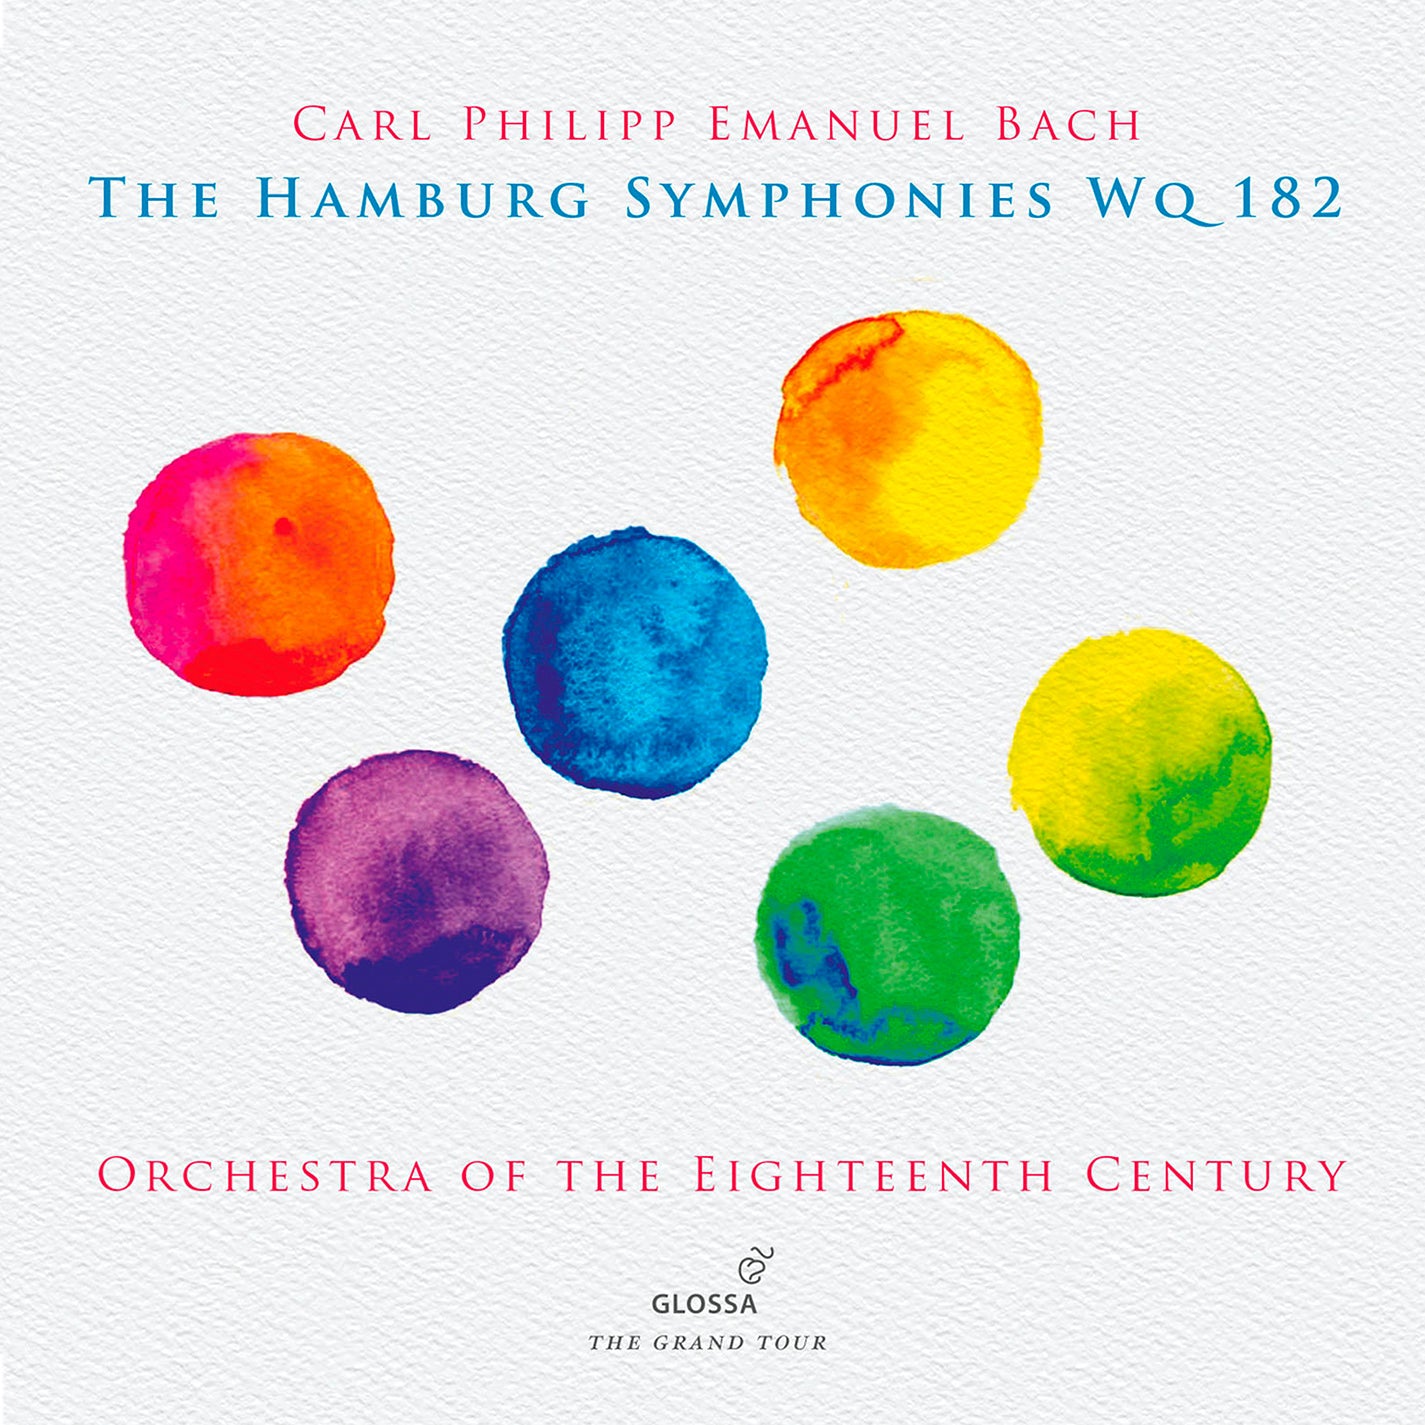 C.P.E. Bach: The Hamburg Symphonies, Wq 182 / Orchestra of the Eighteenth Century